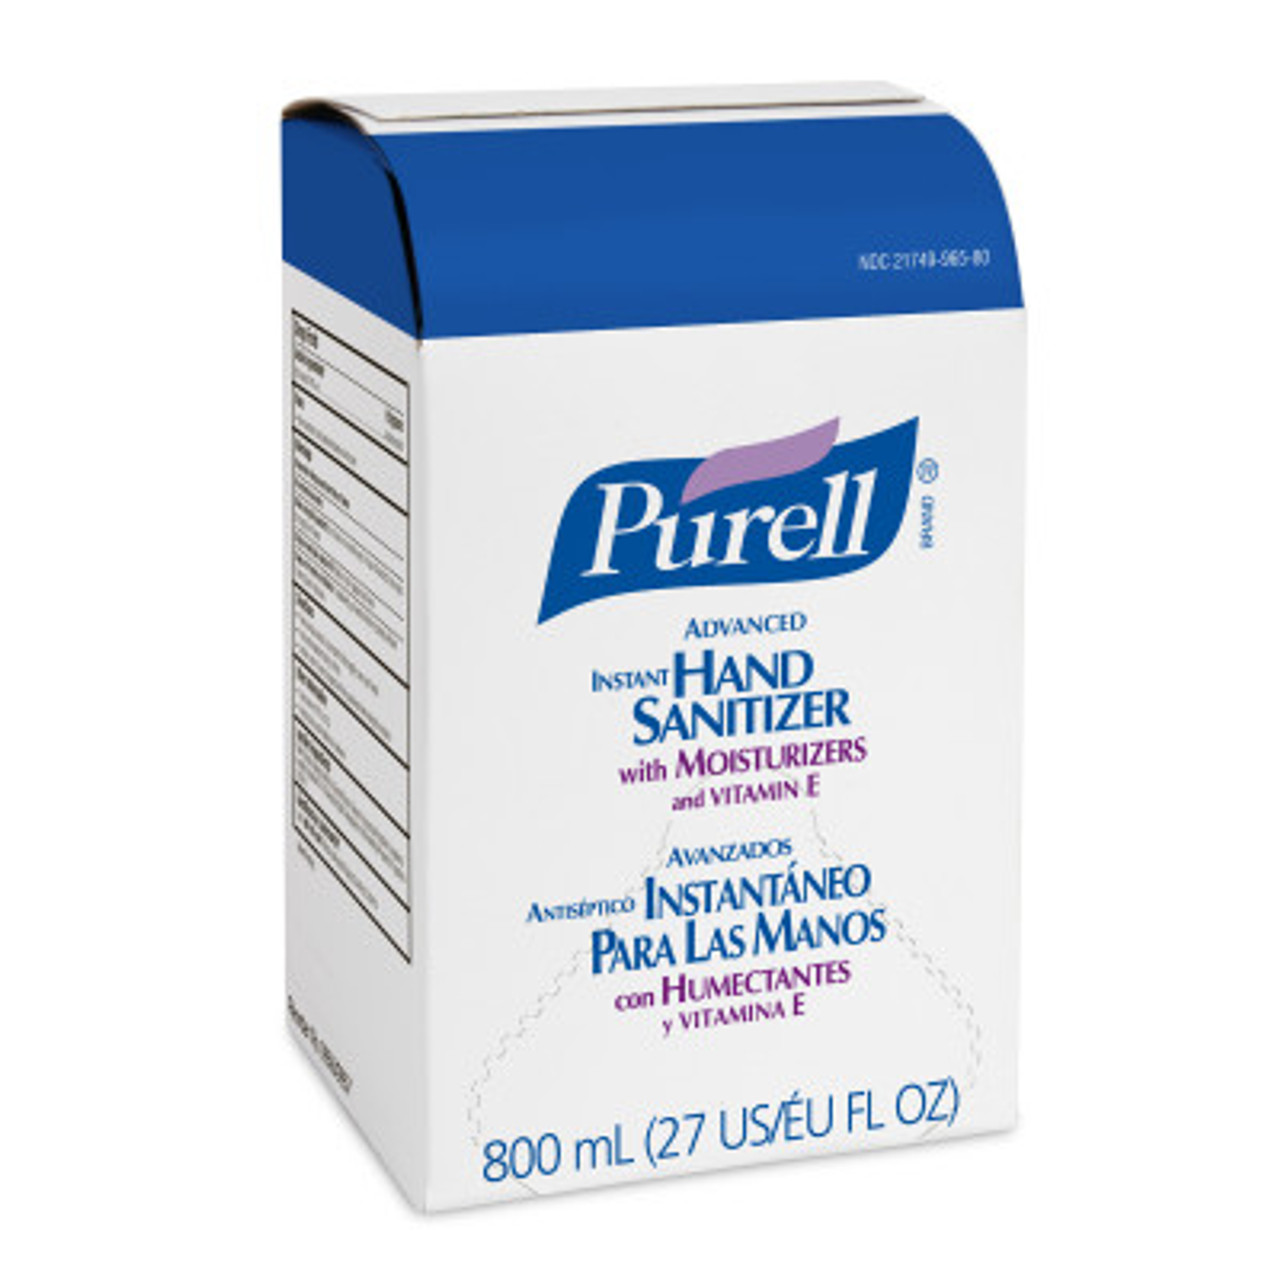 Gojo Purell Advanced Hand Sanitizer Gel 800 mL Refill, Bag-In-Box Dispenser, ea